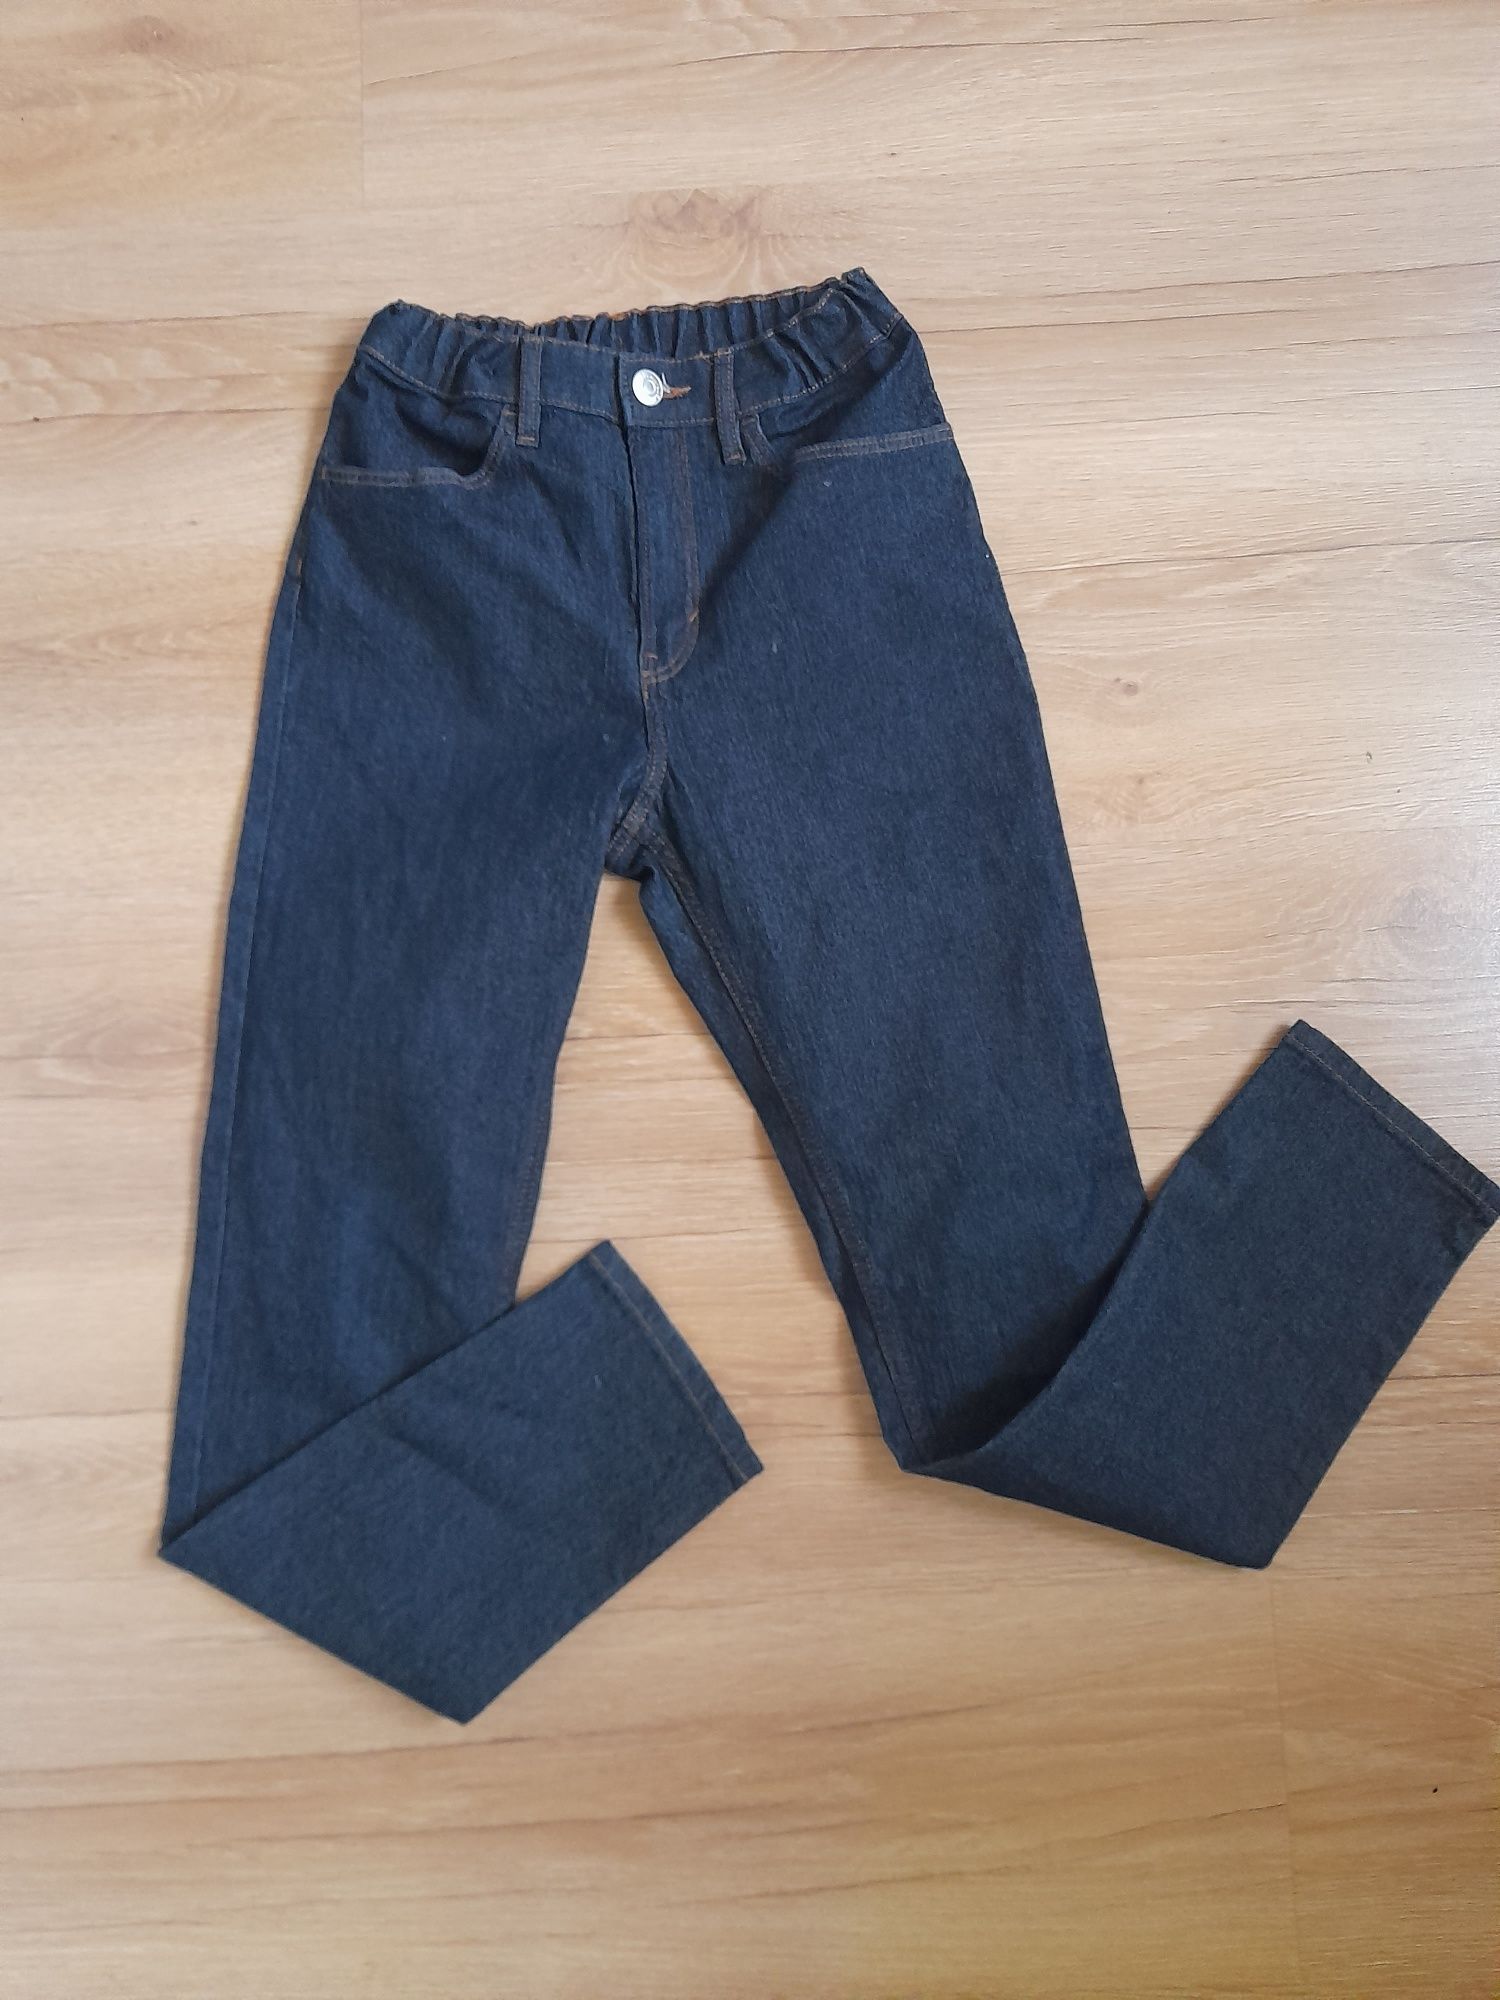 Spodnie jeansy h&m dla chłopca 164